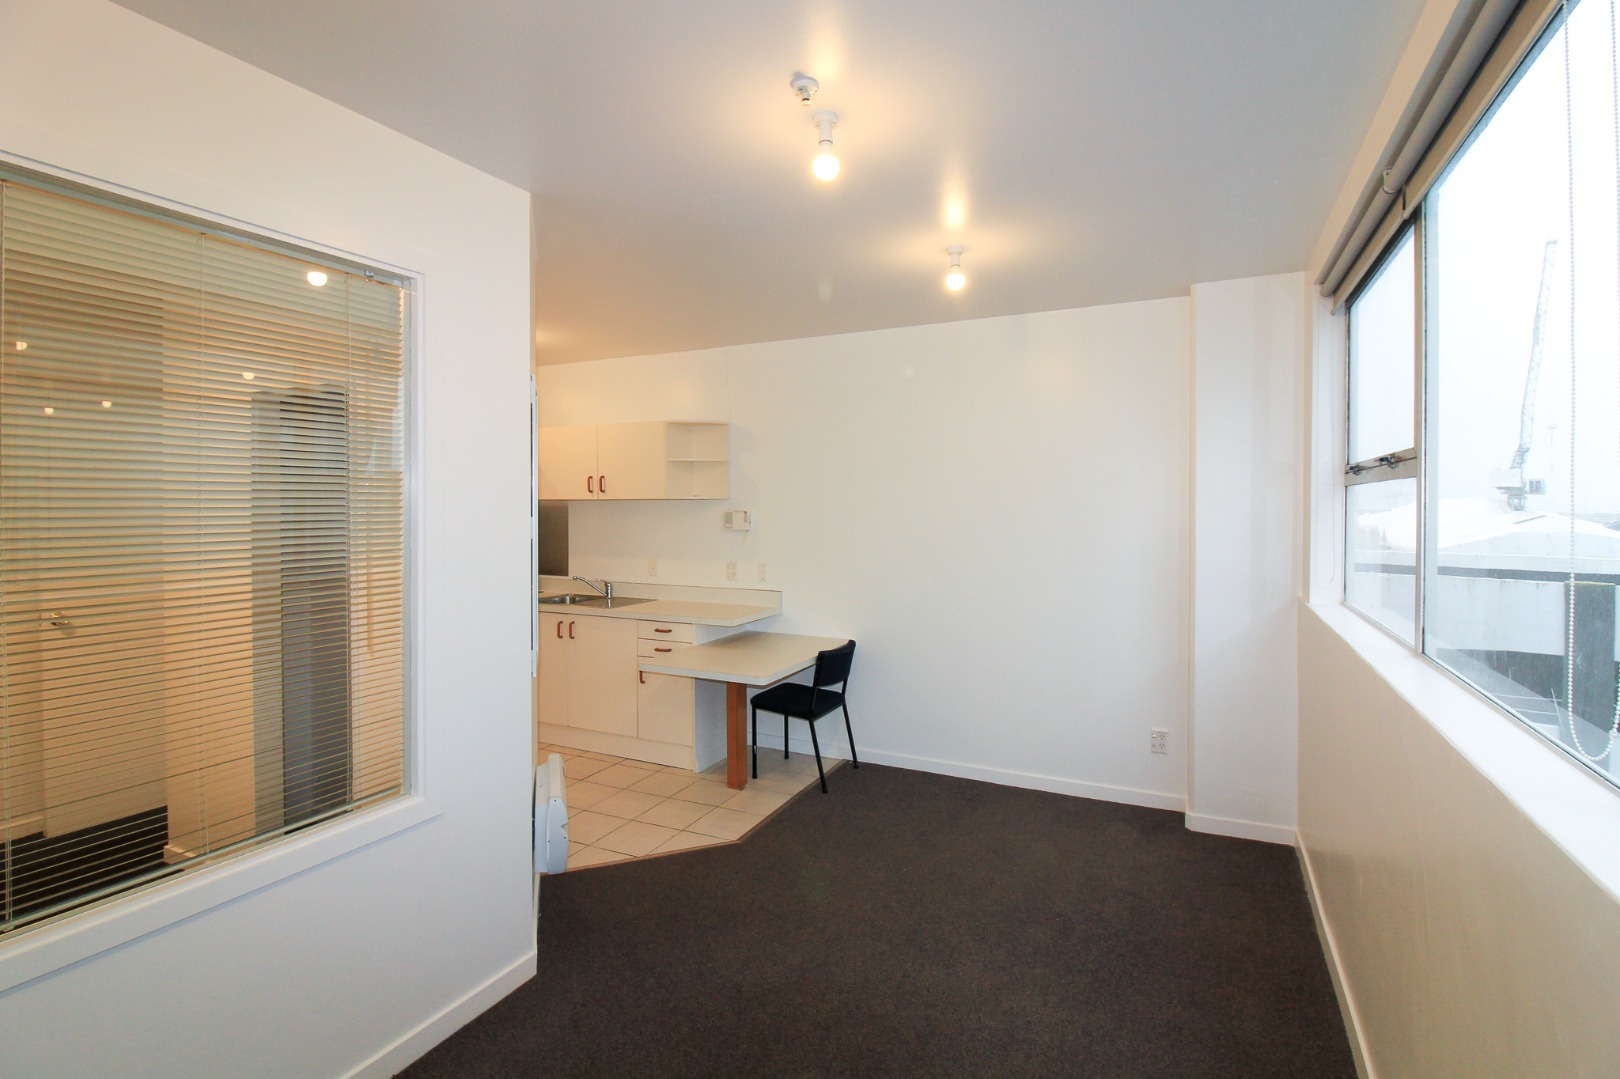 Real Estate For Rent Houses & Apartments : Central city 1 bdm apartment, Wellington